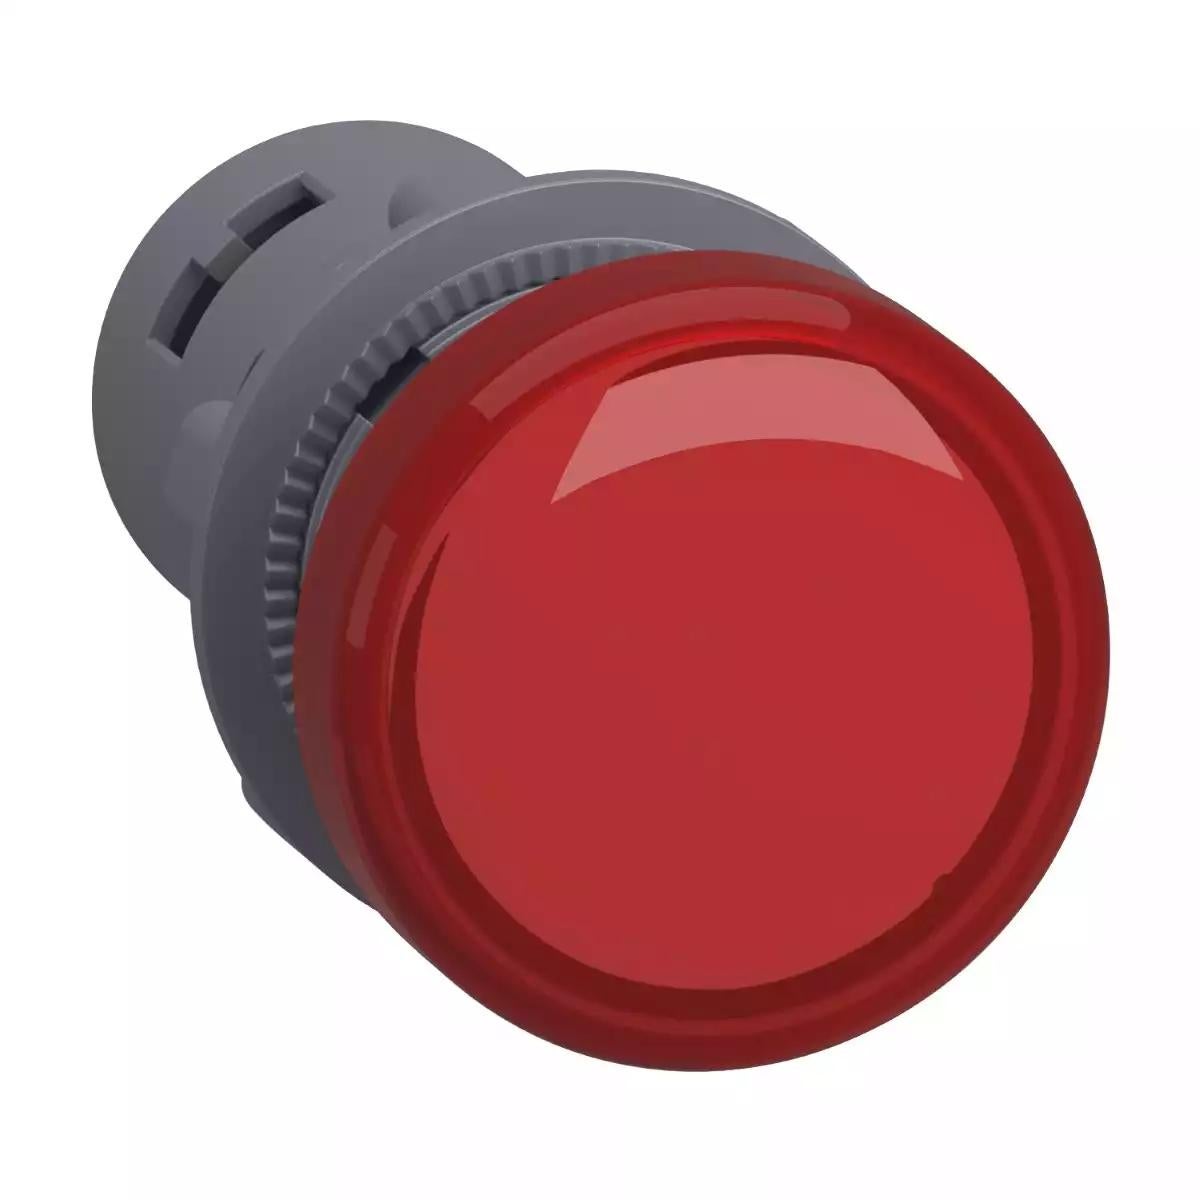 Pilot light, plastic, red, Ø 22 mm, with integral LED, 110 V AC/DC, Anti-interference